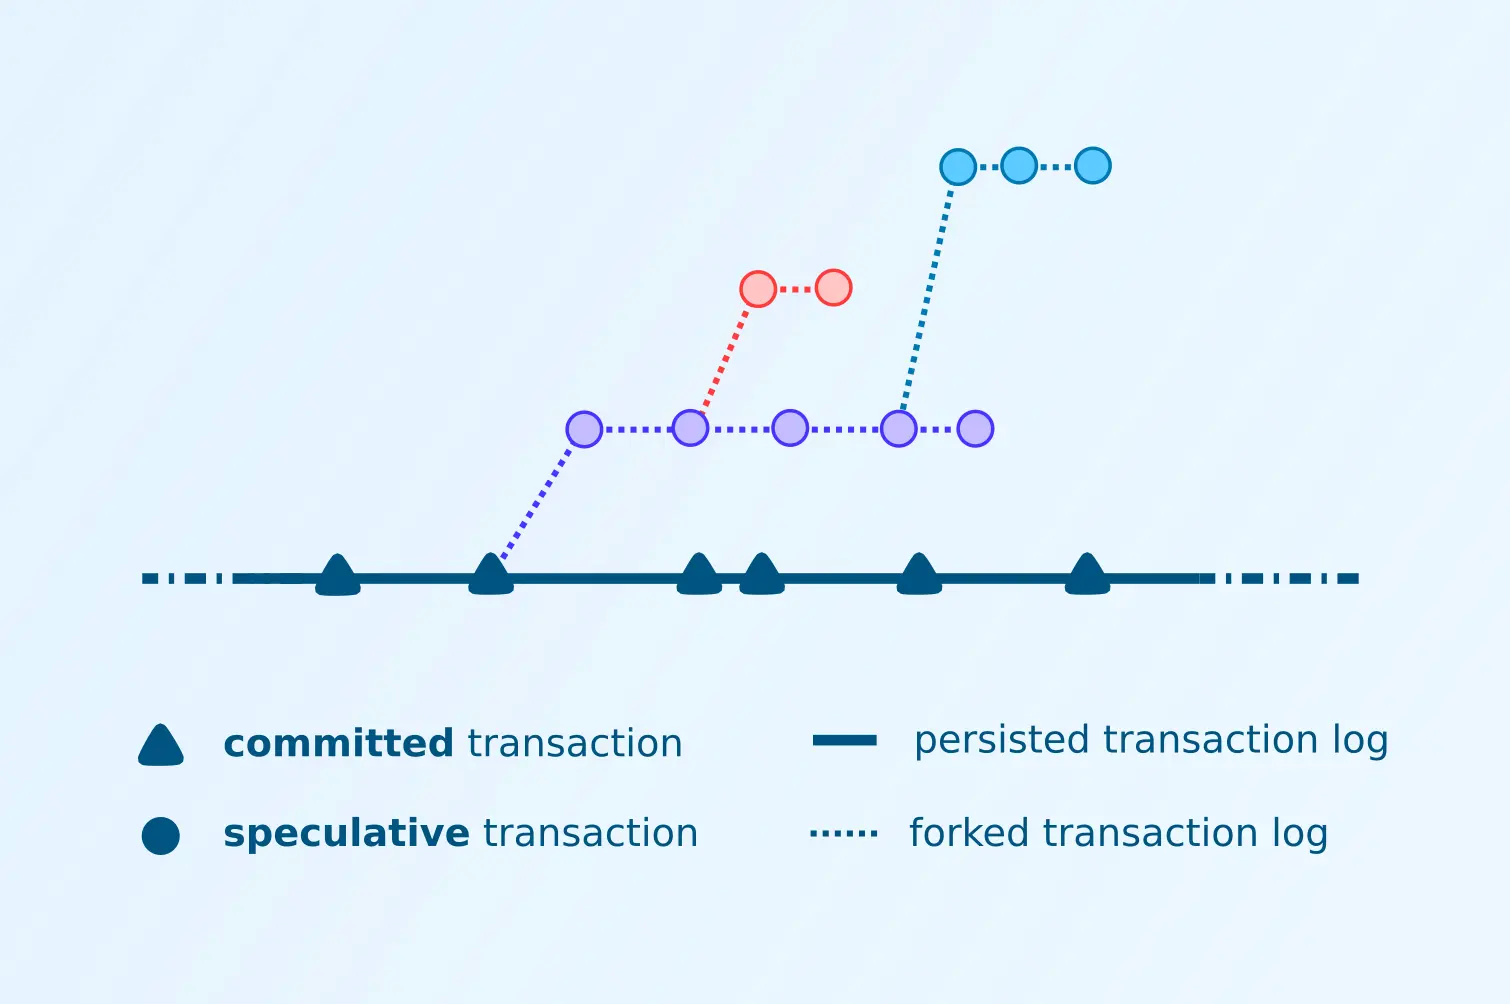 Spectulative transactions